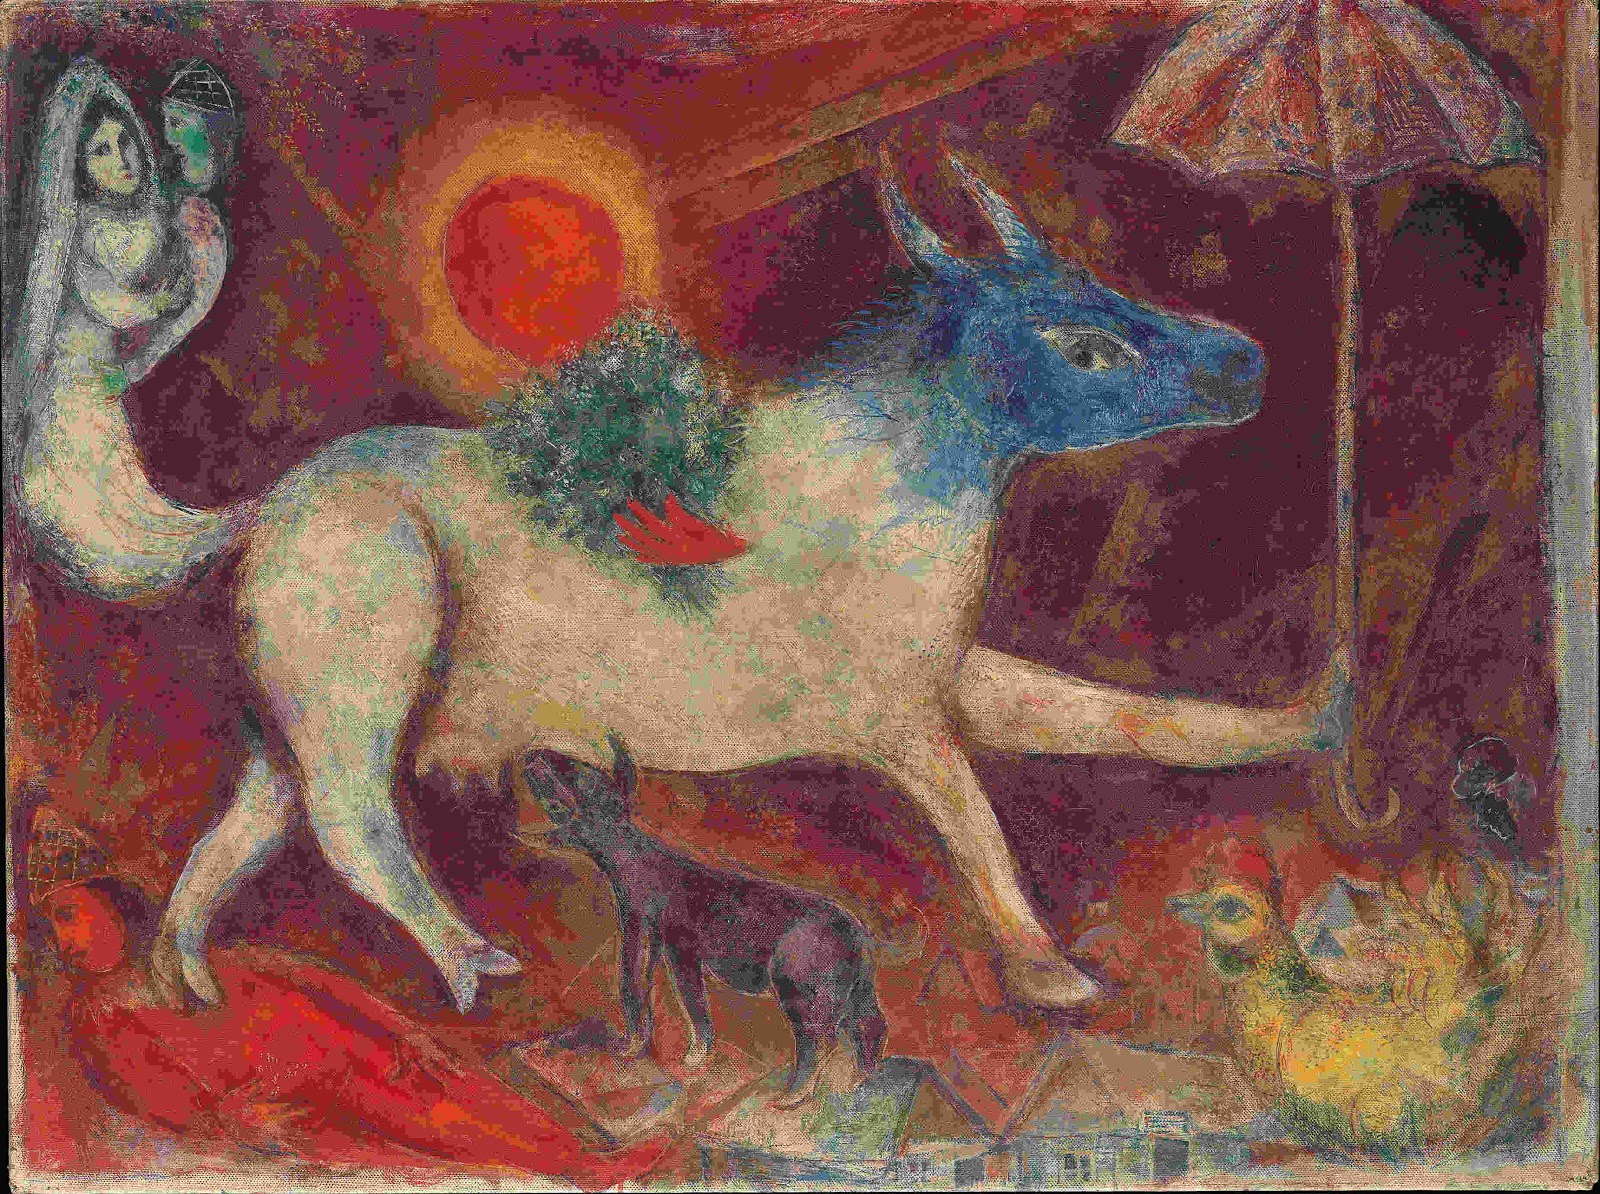 Marc+Chagall-1887-1985 (406).jpg